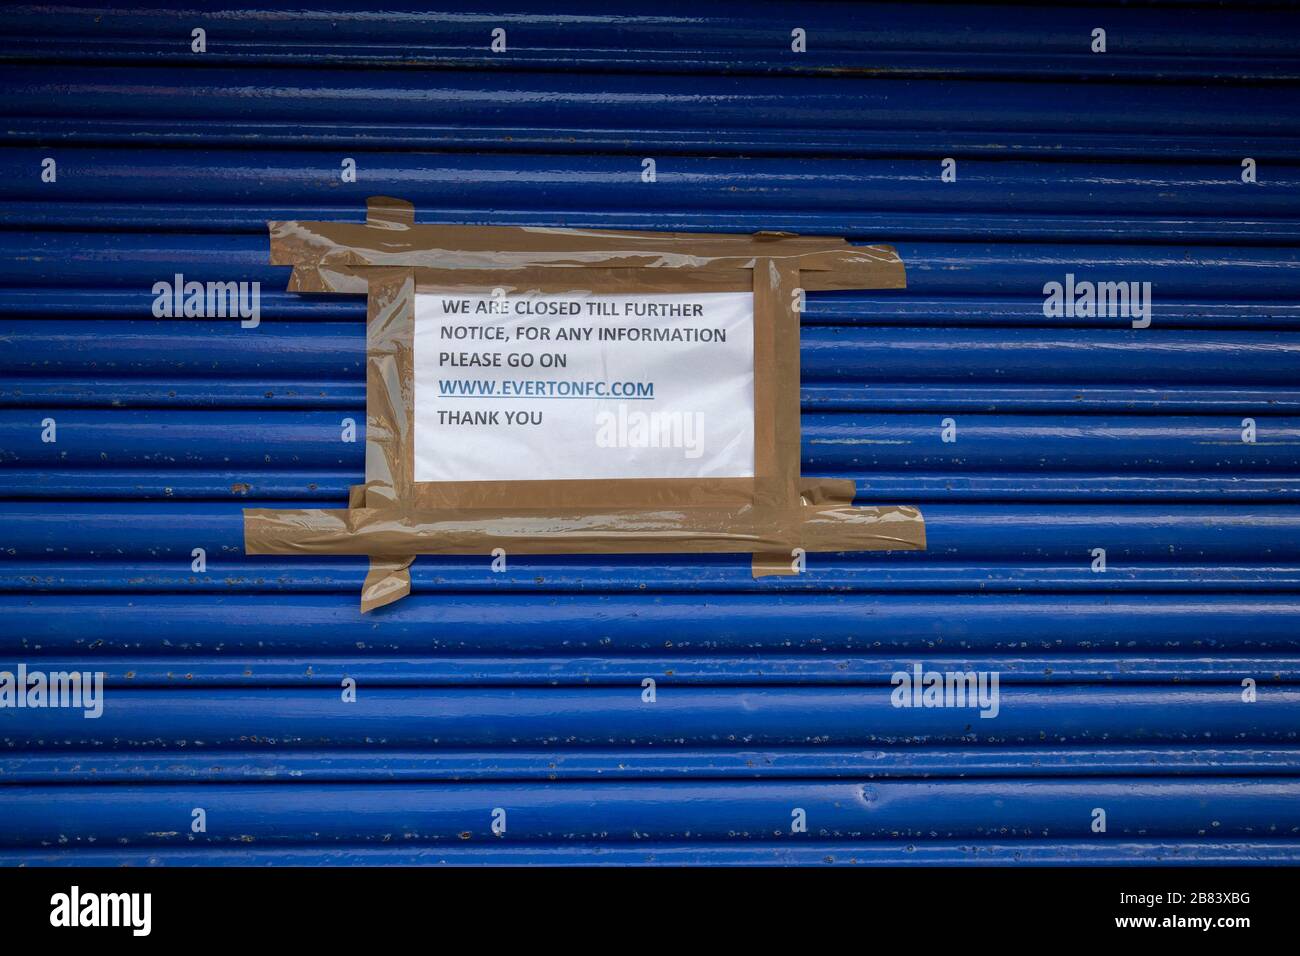 Everton Football club and surrounding business during the Coronavirus outbreak Stock Photo